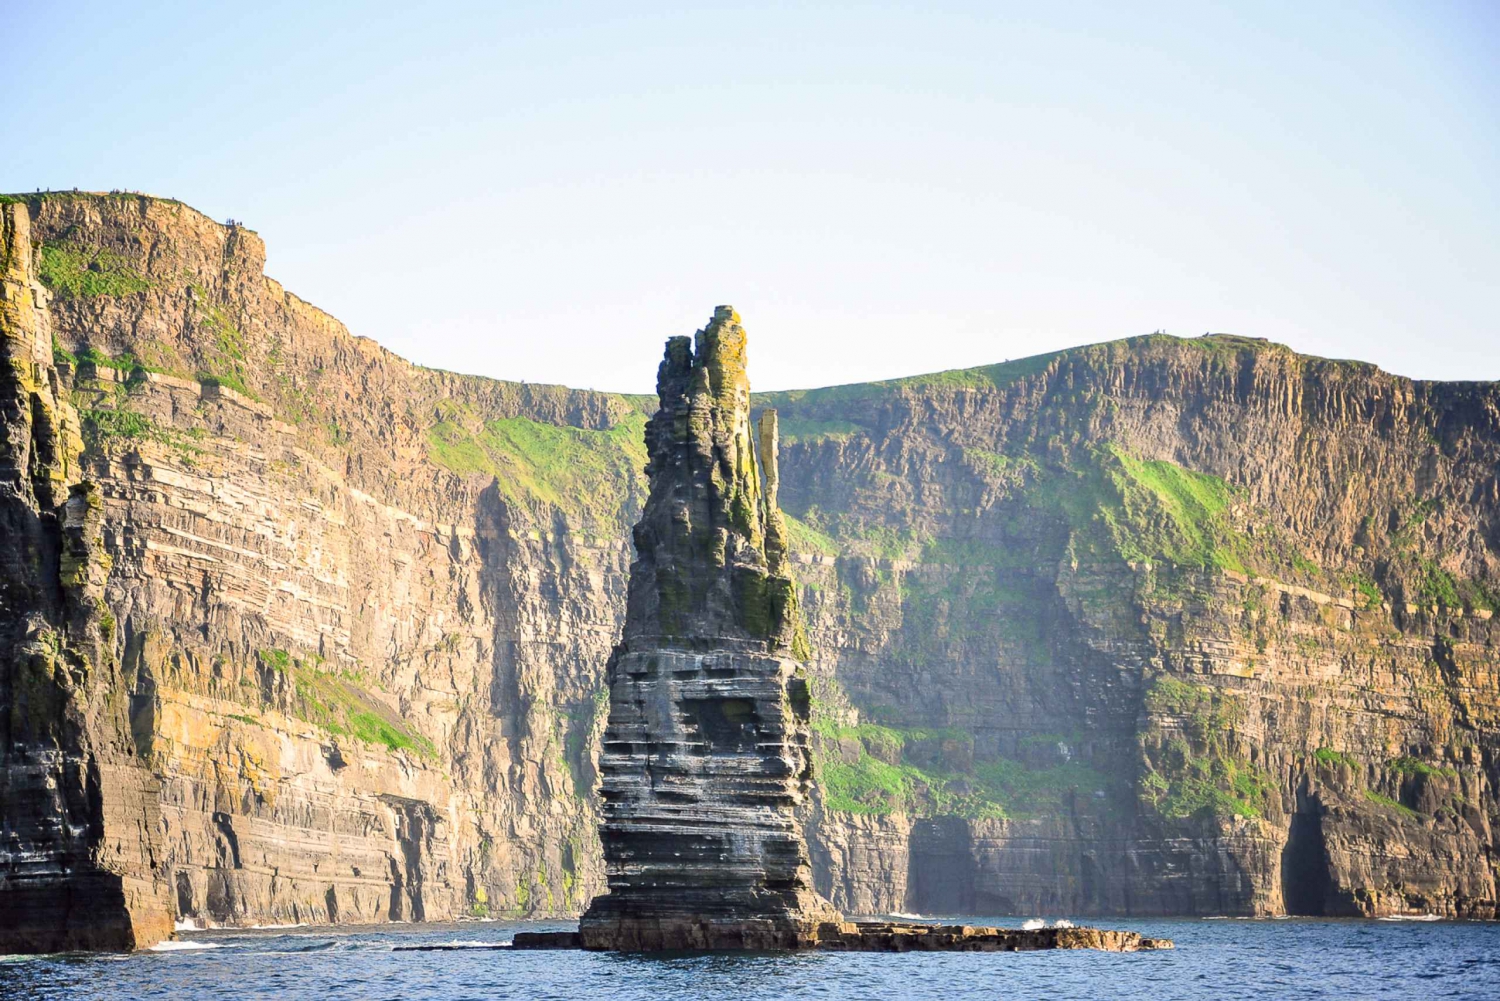 Cliffs of Moher Full-Day Tour from Dublin